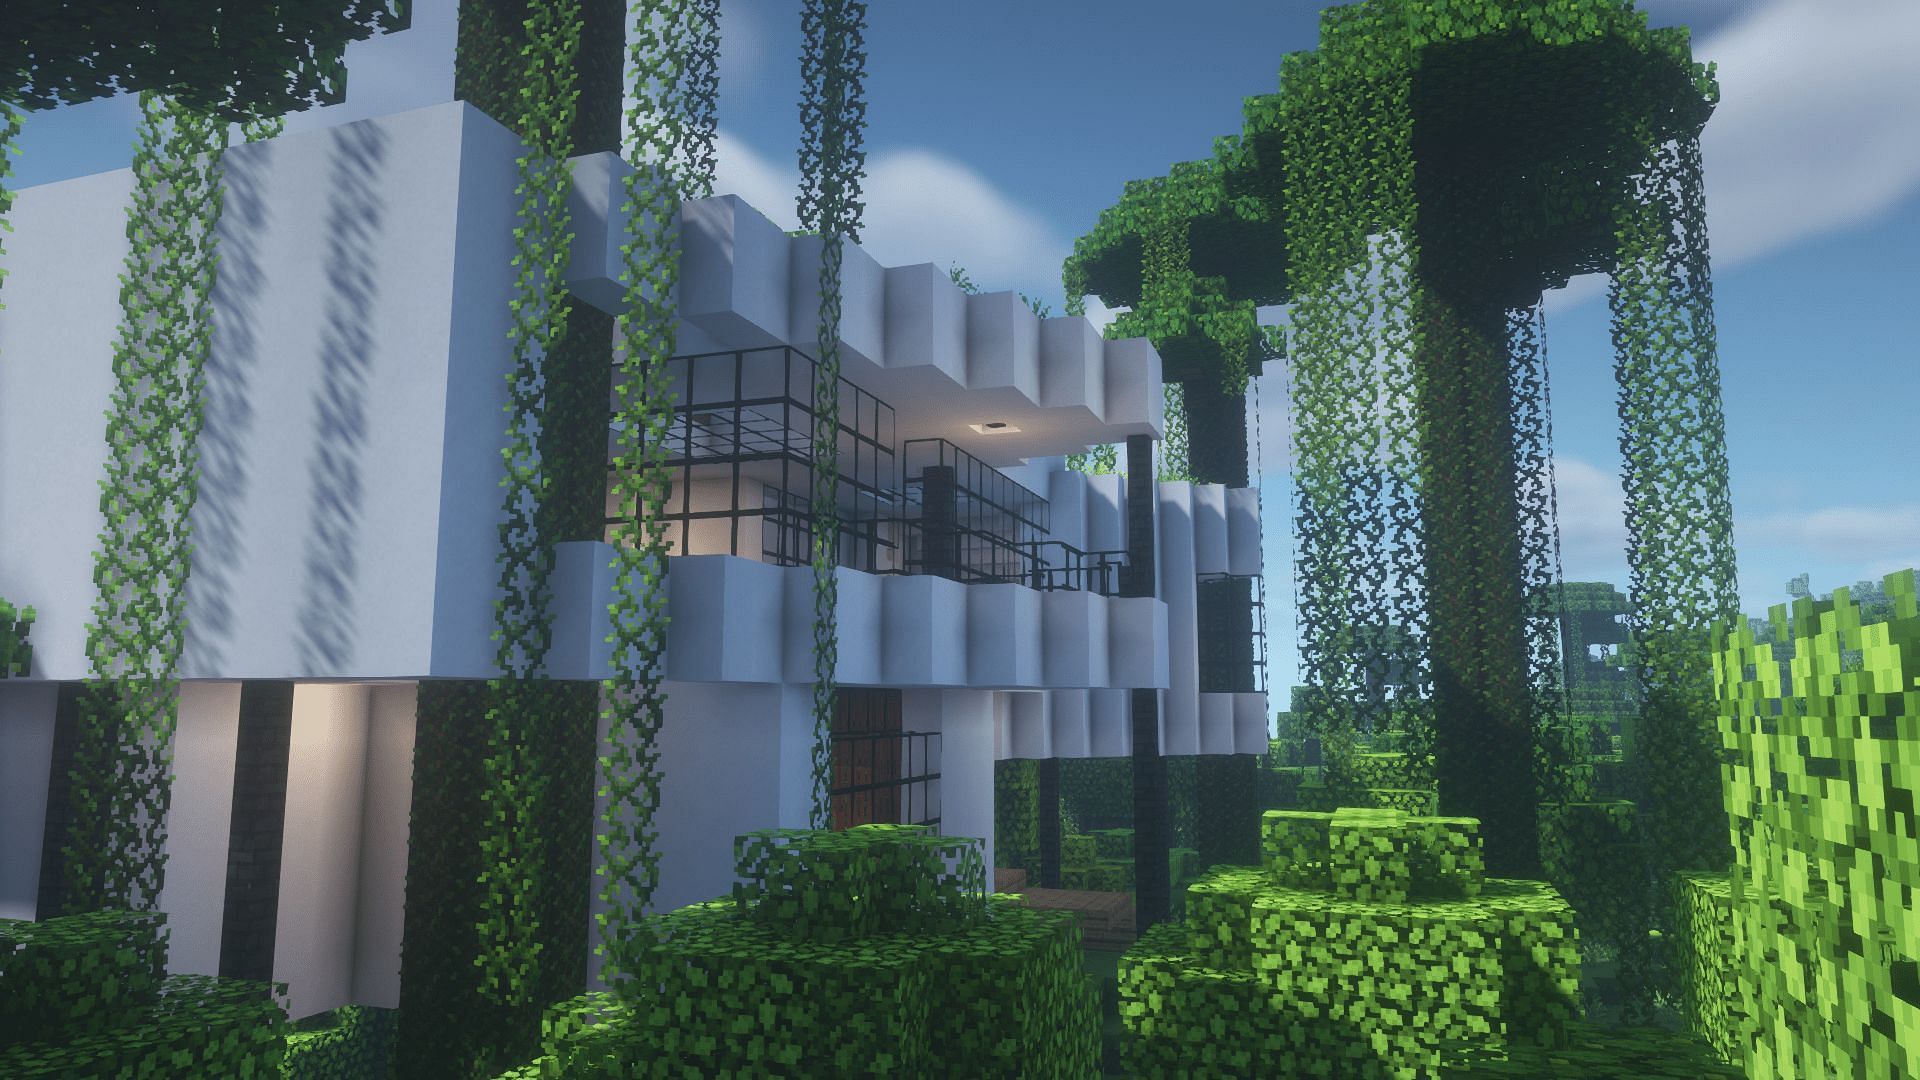 FOREST-SIDE AMODERN HOUSE para Minecraft